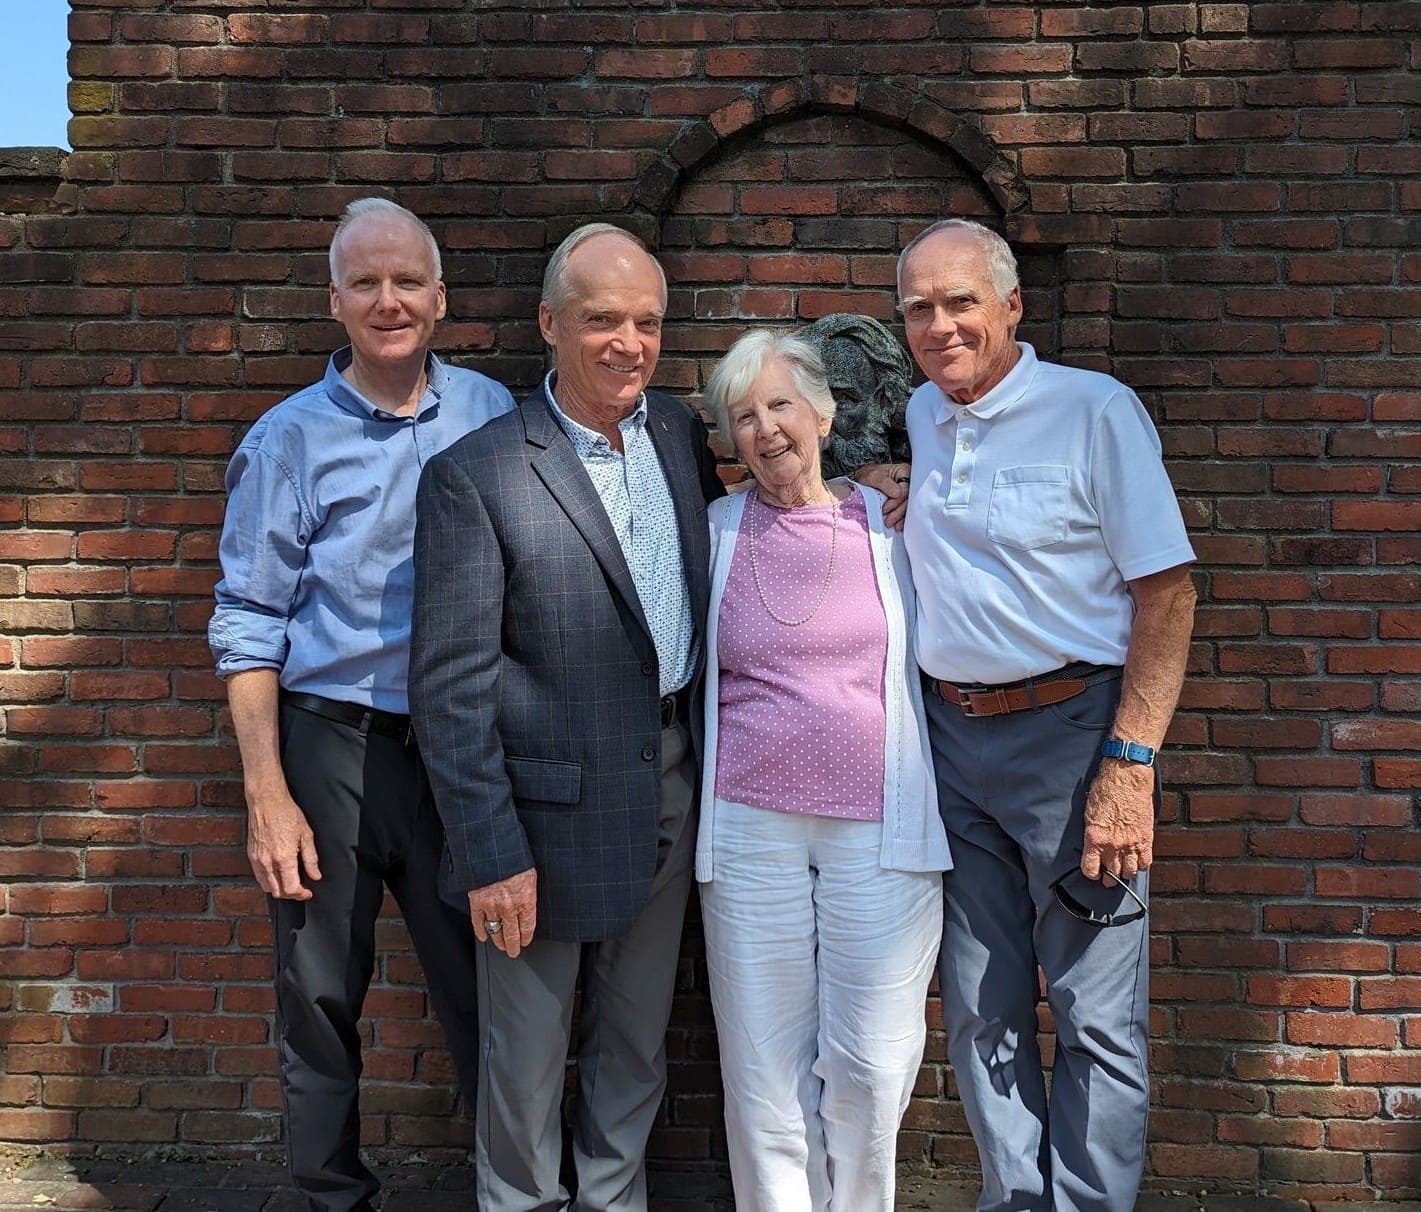 Rimkus: Four generations of Precourt family reunite